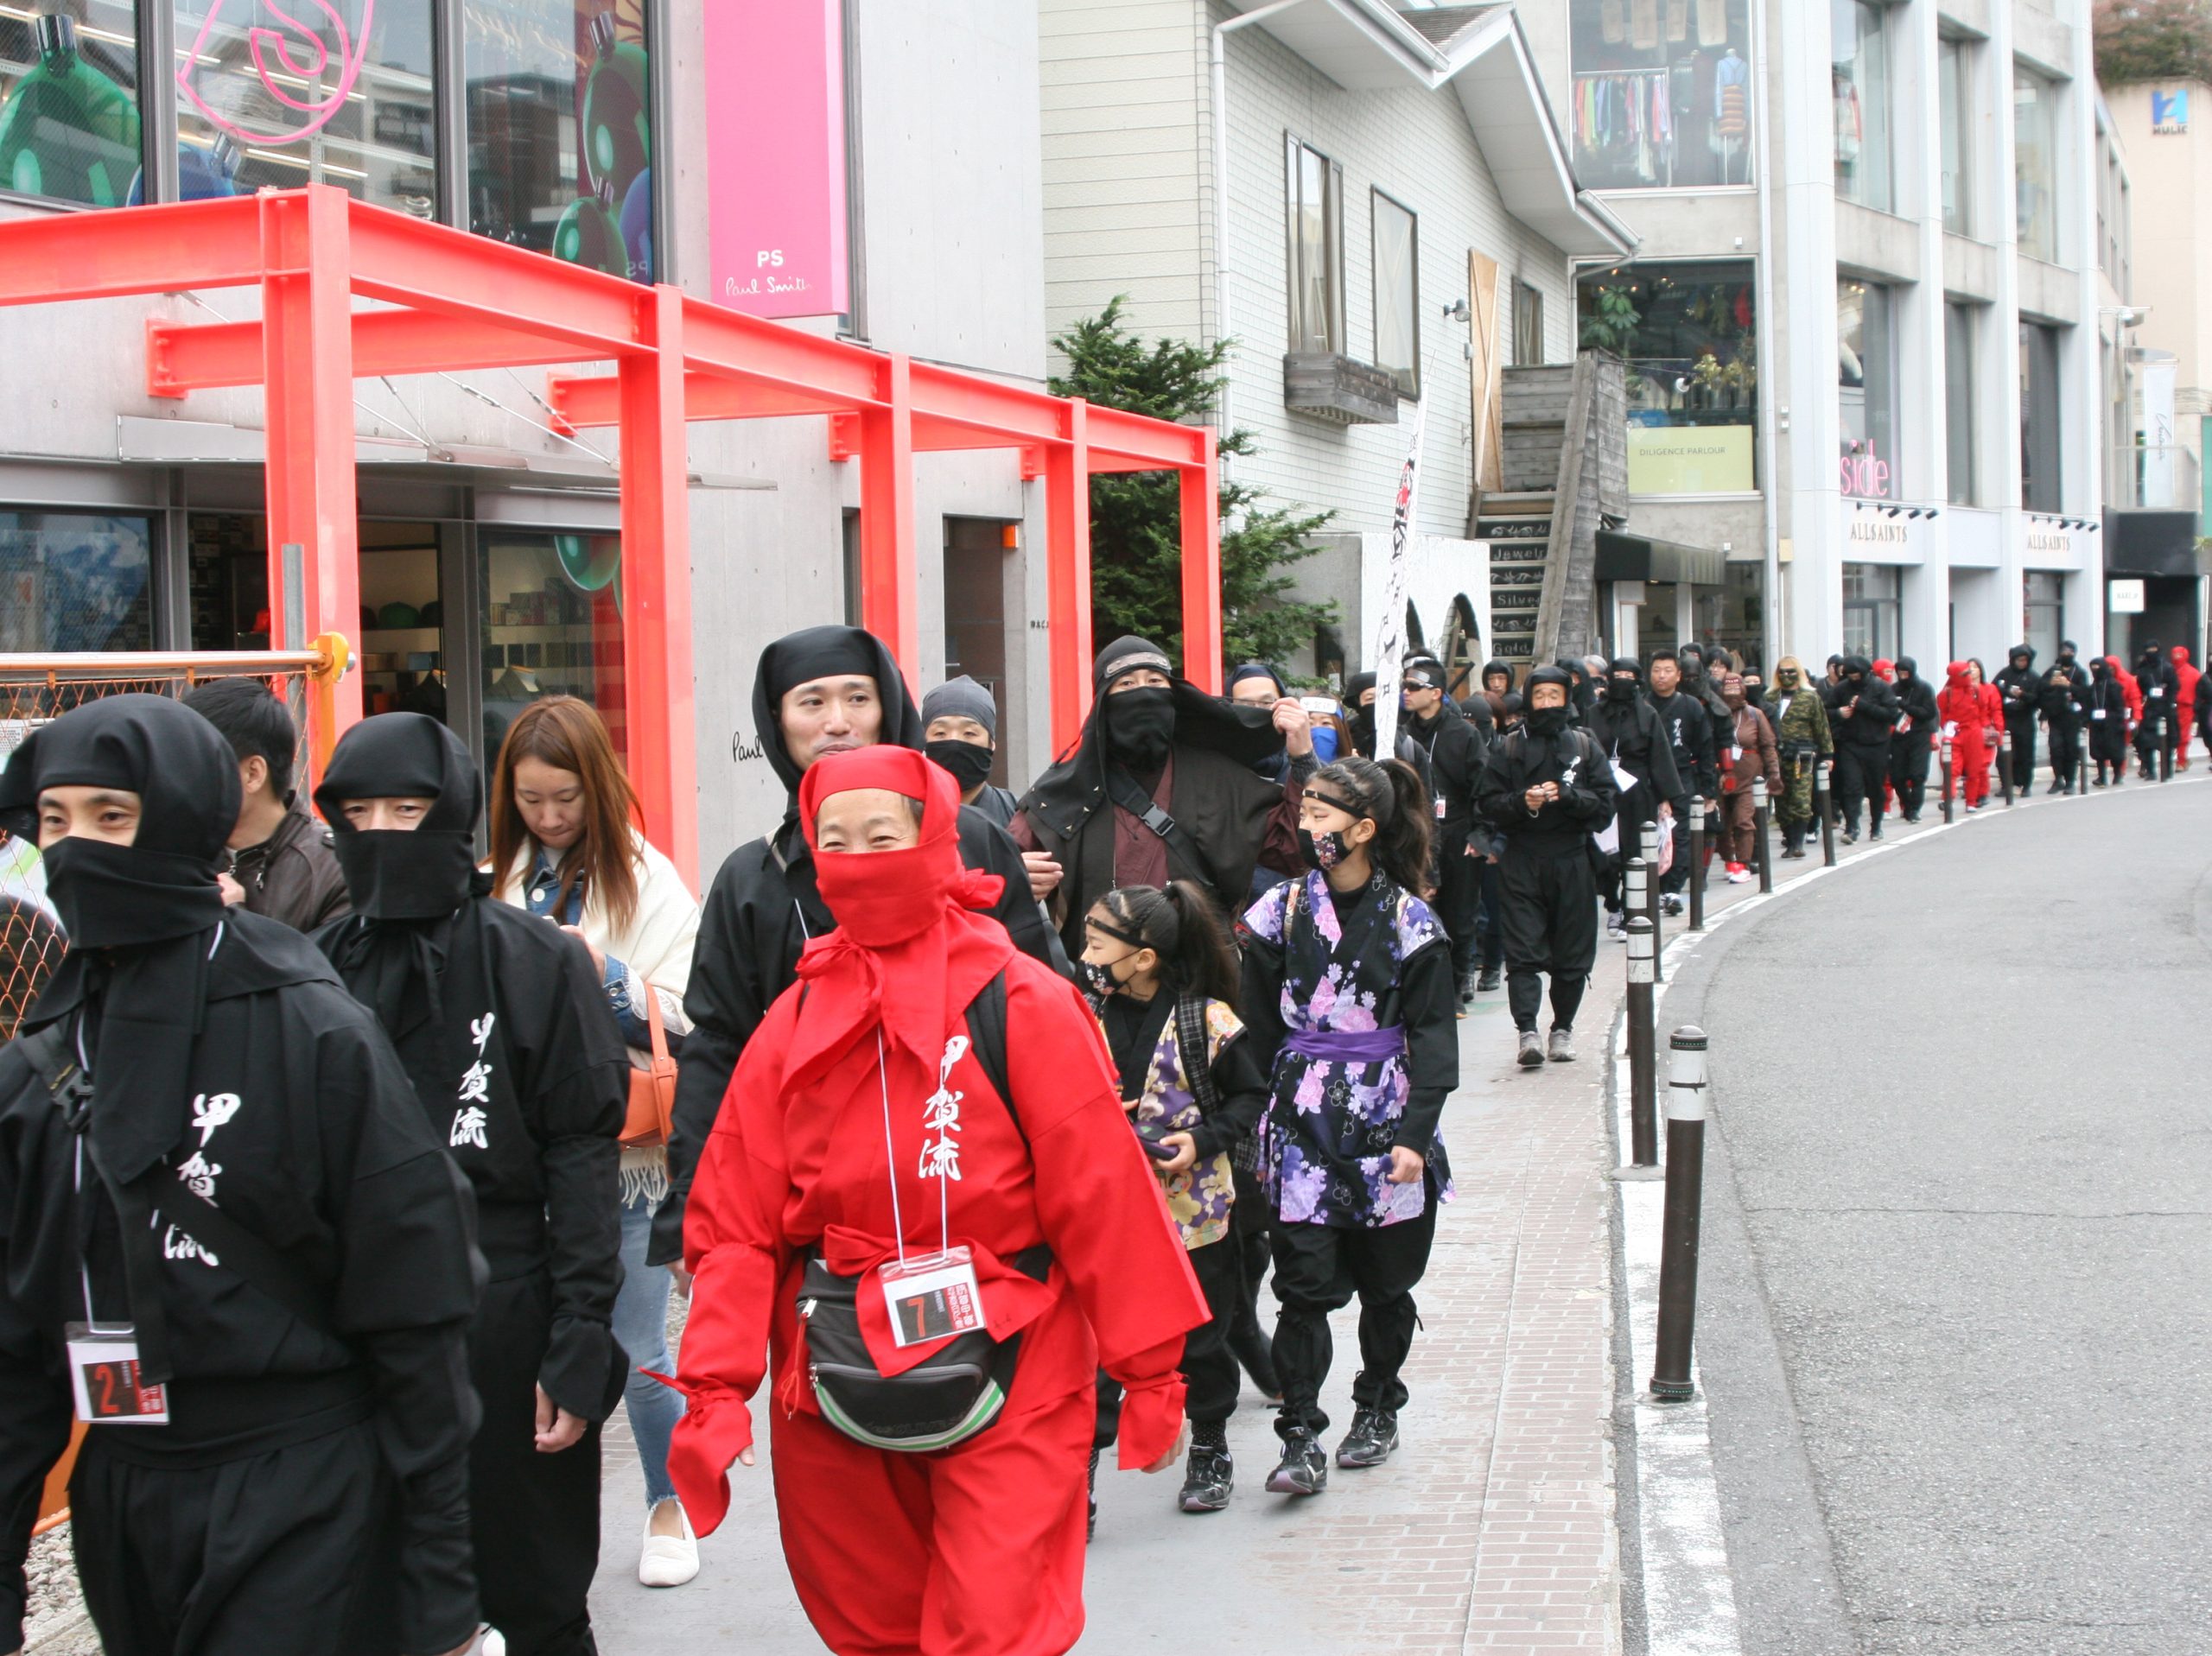 【EVENT INFORMATION: walking event】100 NINJAS WALKING～Trace The Presence of Iga/Koka in Tokyo Part 7~